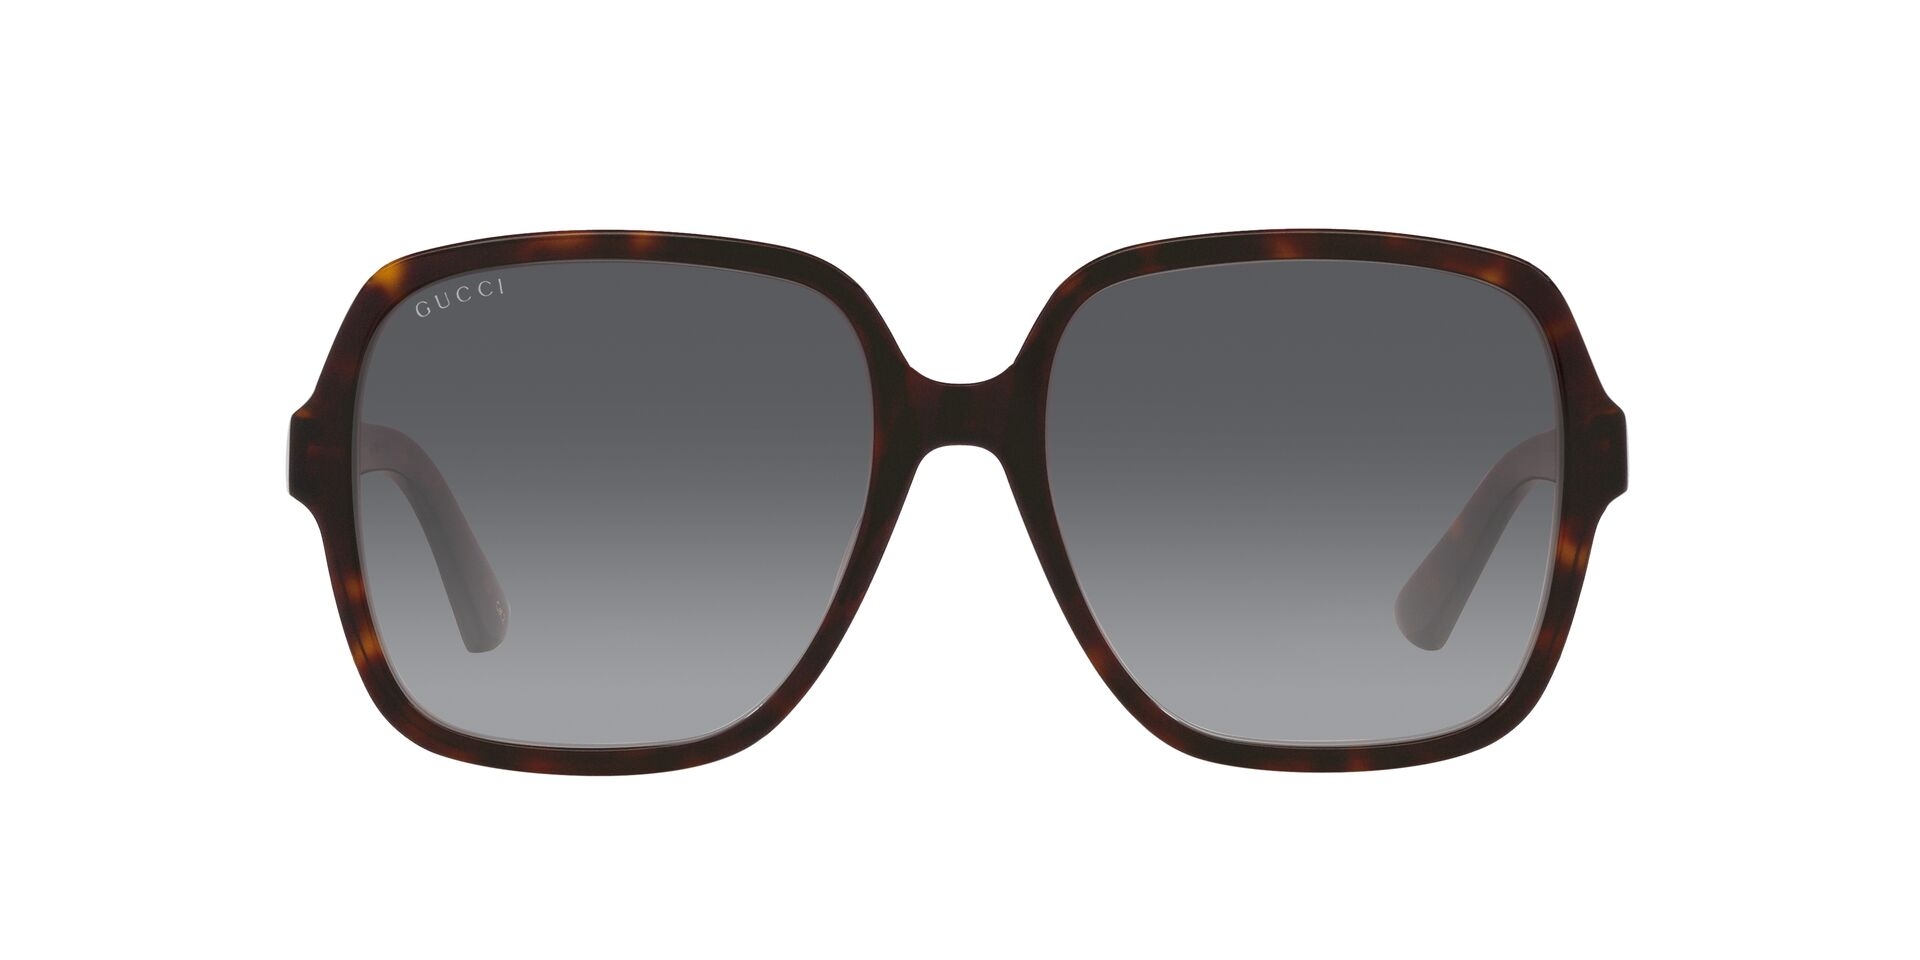 Gucci Sunglasses for Women-nextbuild.com.vn